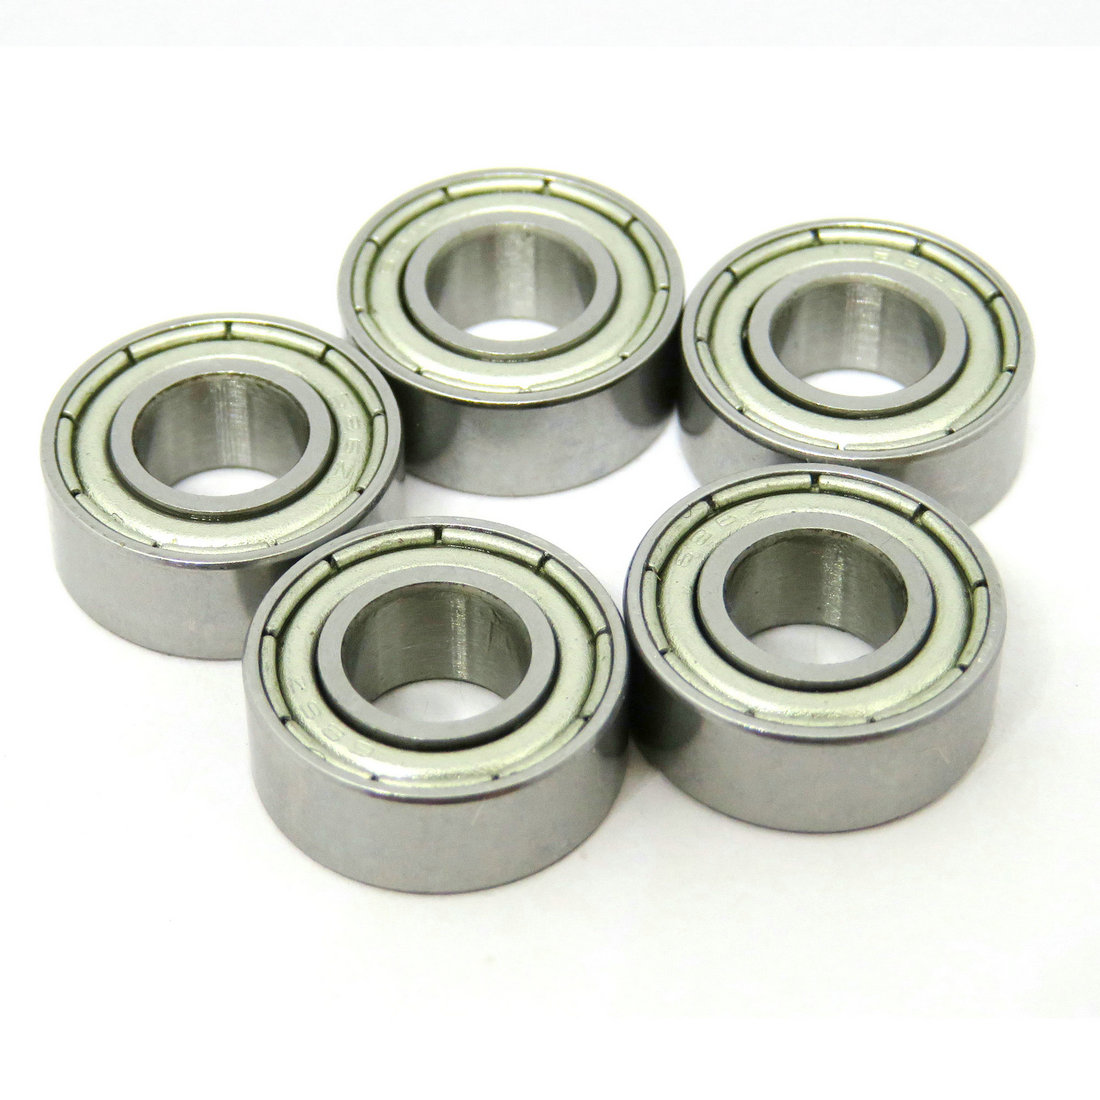 686 ZZ miniature deep groove ball bearing shield cover 6x13x5mm 686zz for 3D printer